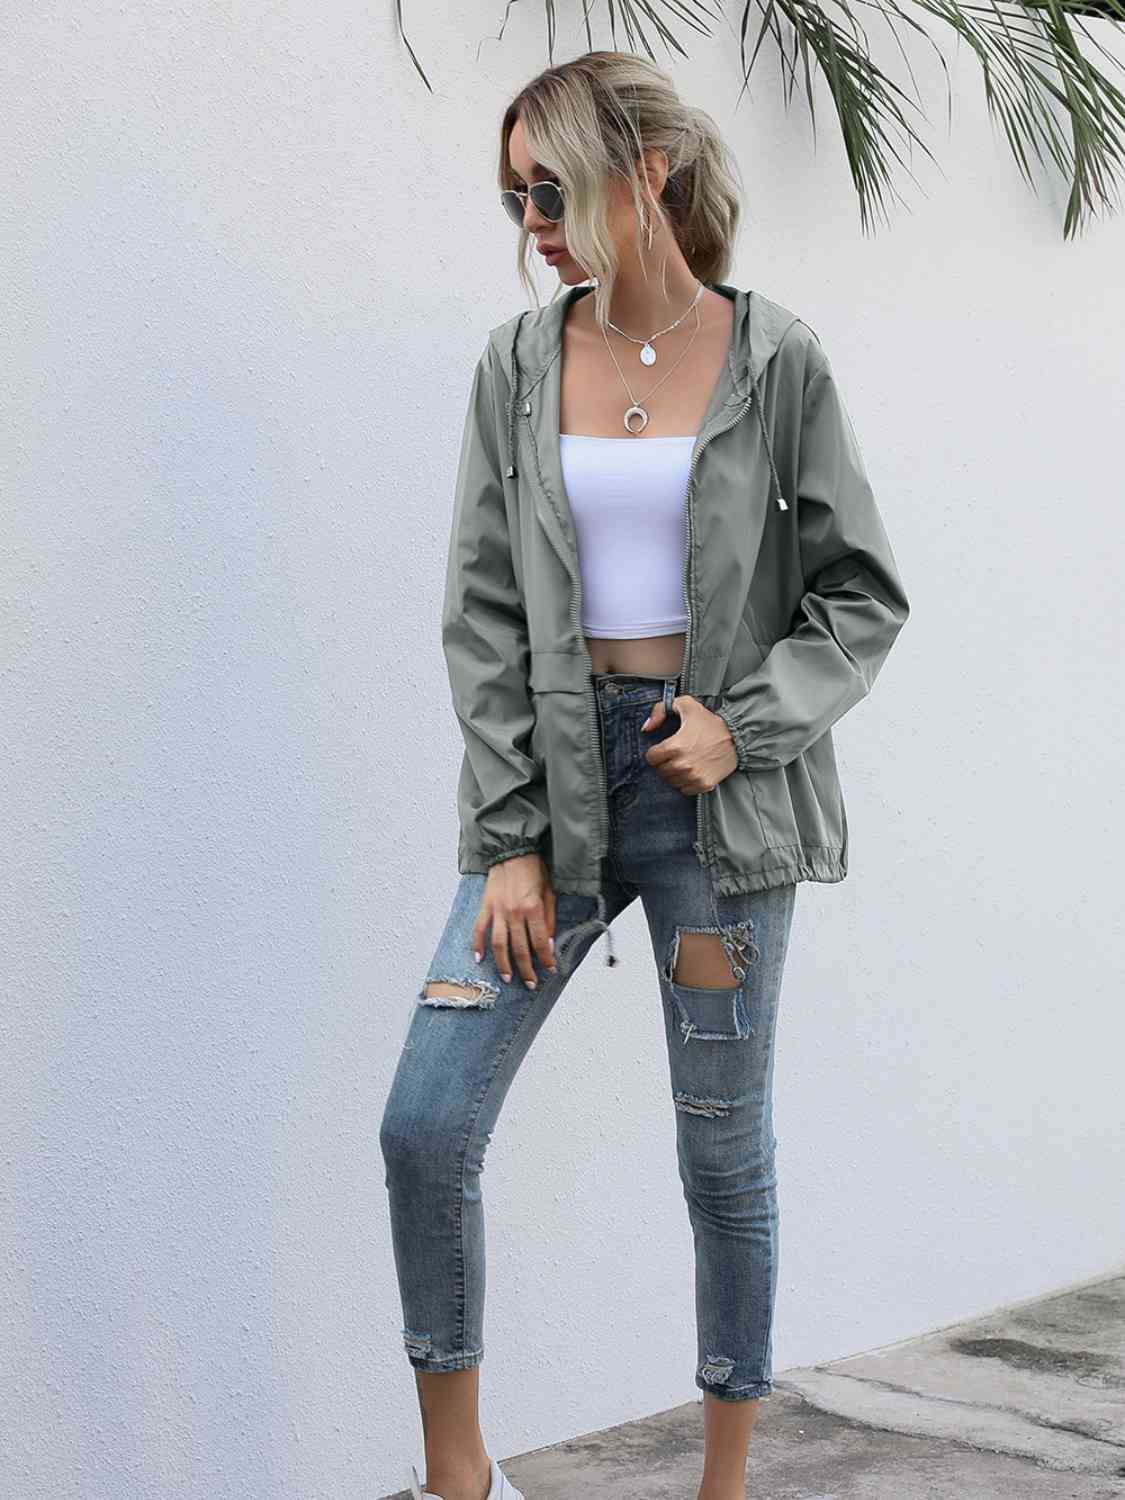 Drawstring Zip-Up Hooded Jacket - Fashion Girl Online Store